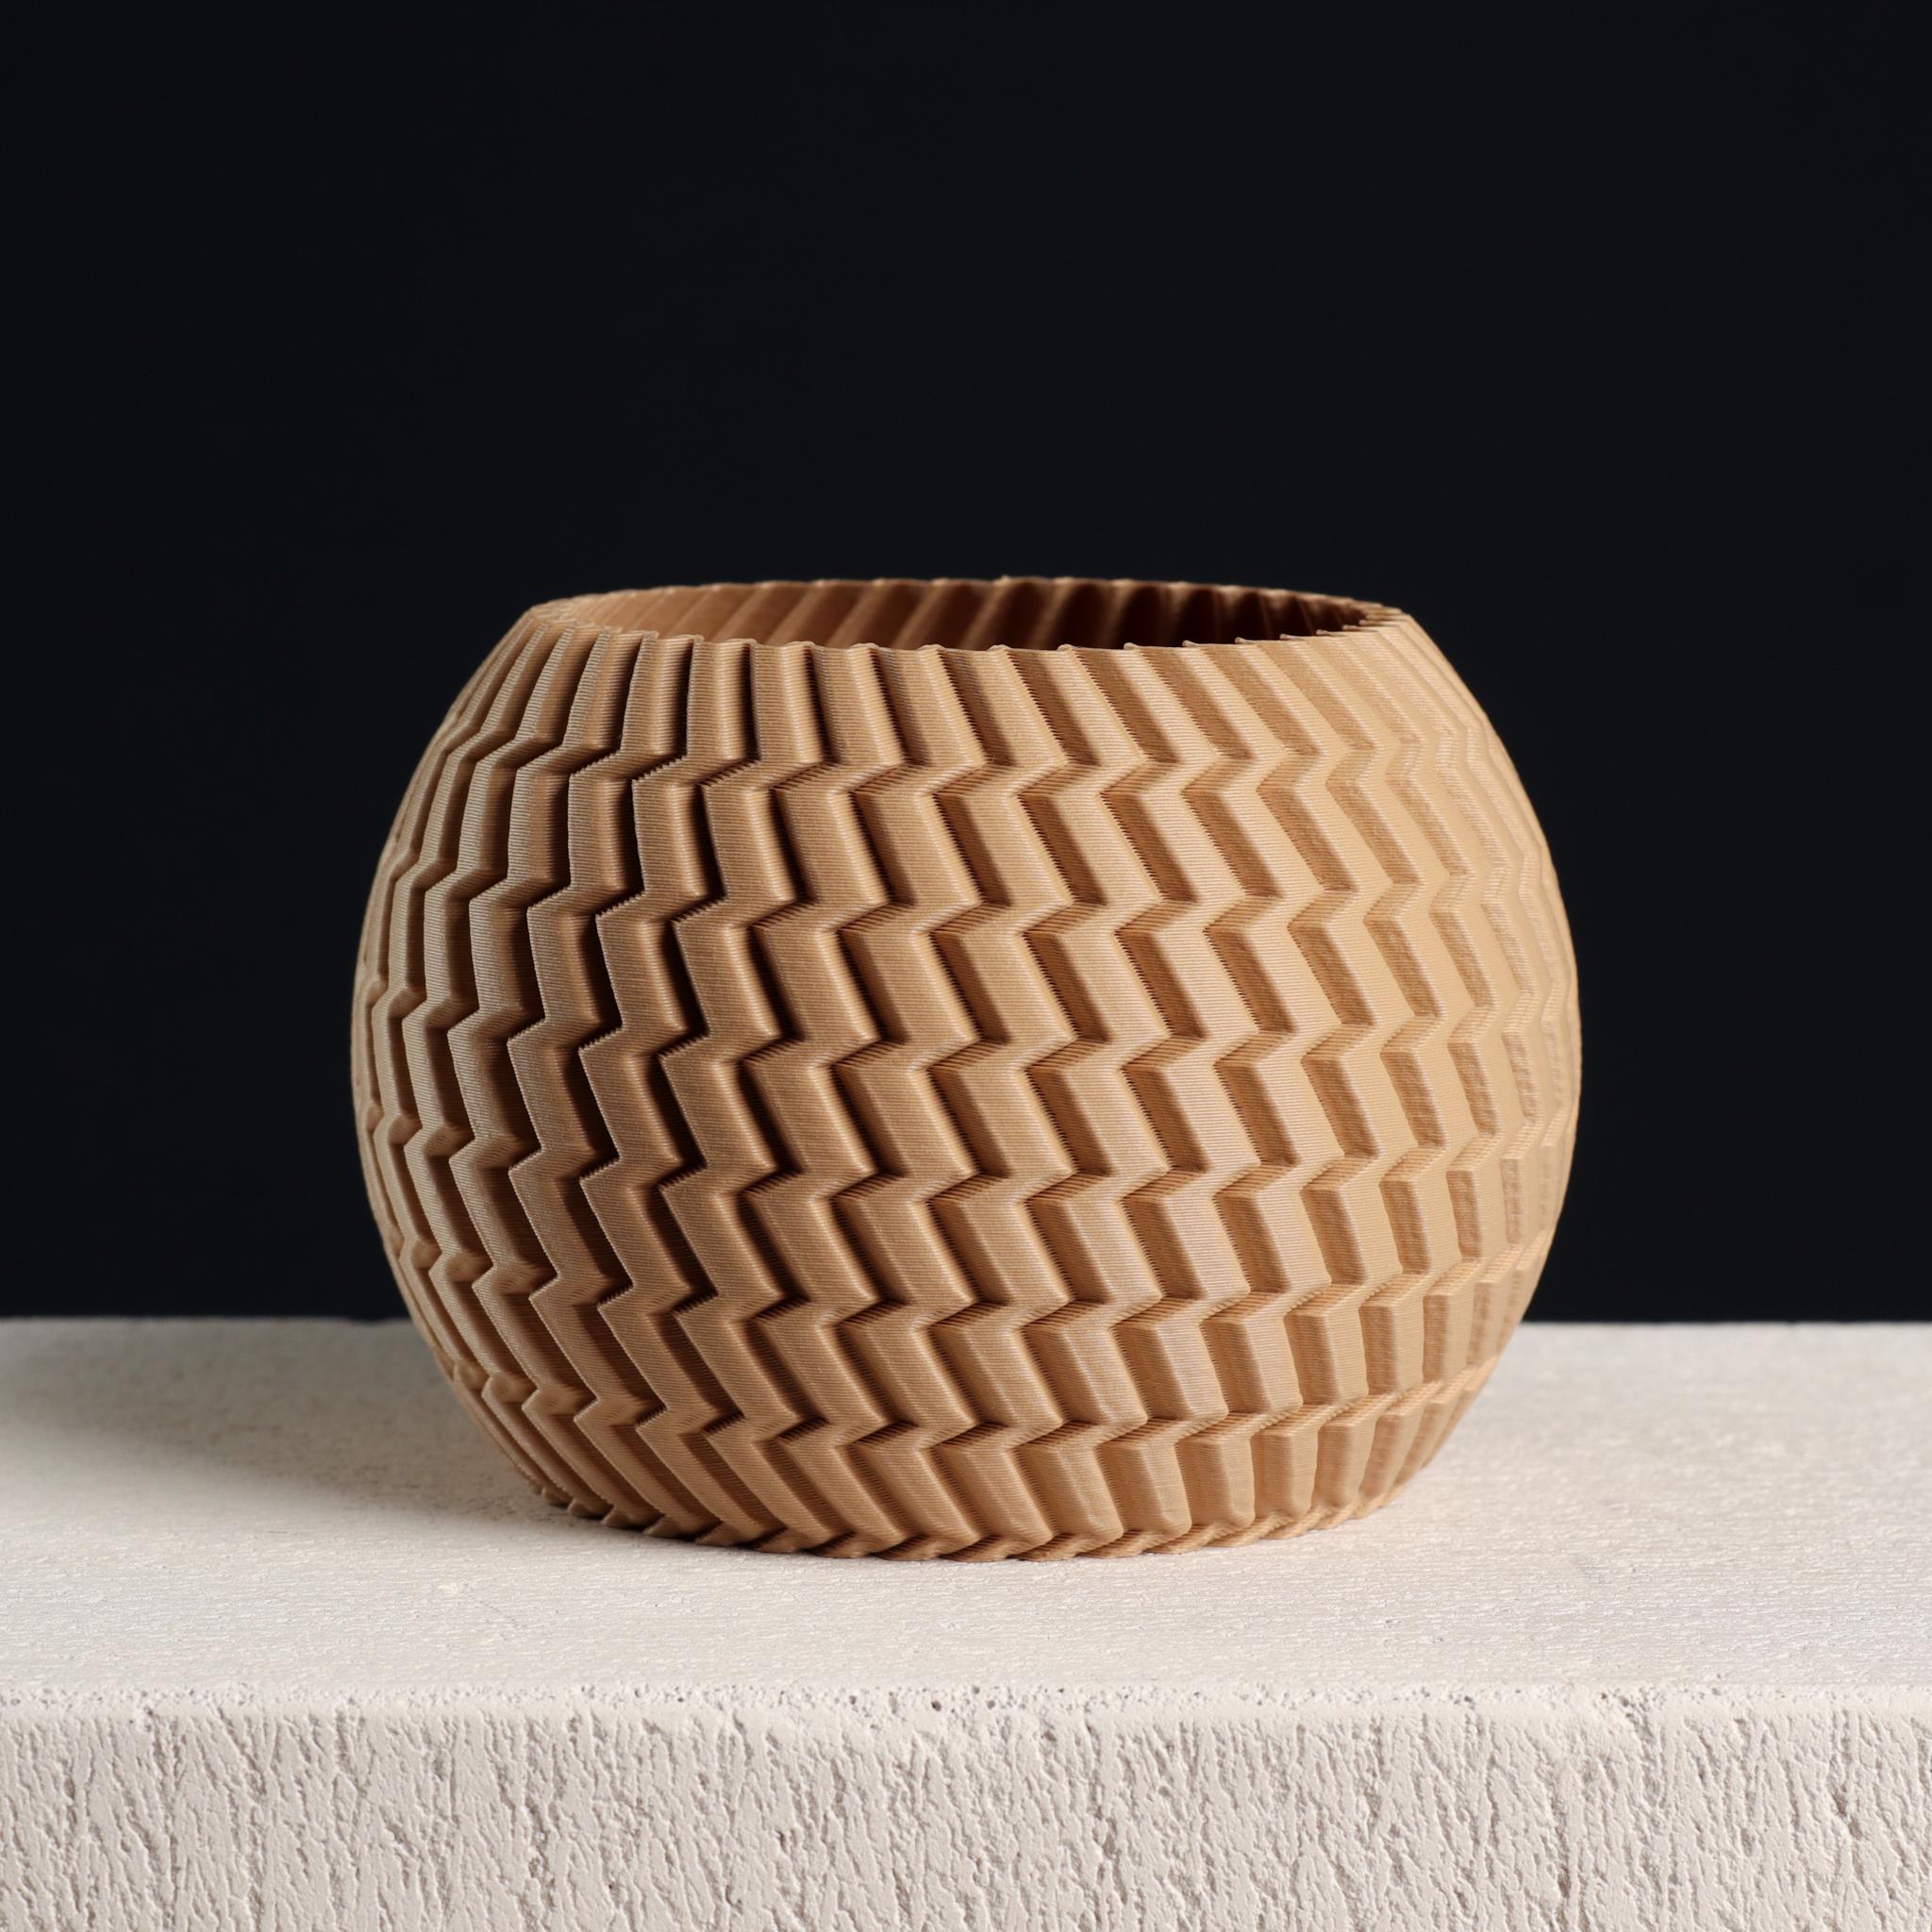  Sphere Planter Zigzag (vase mode)  3d model